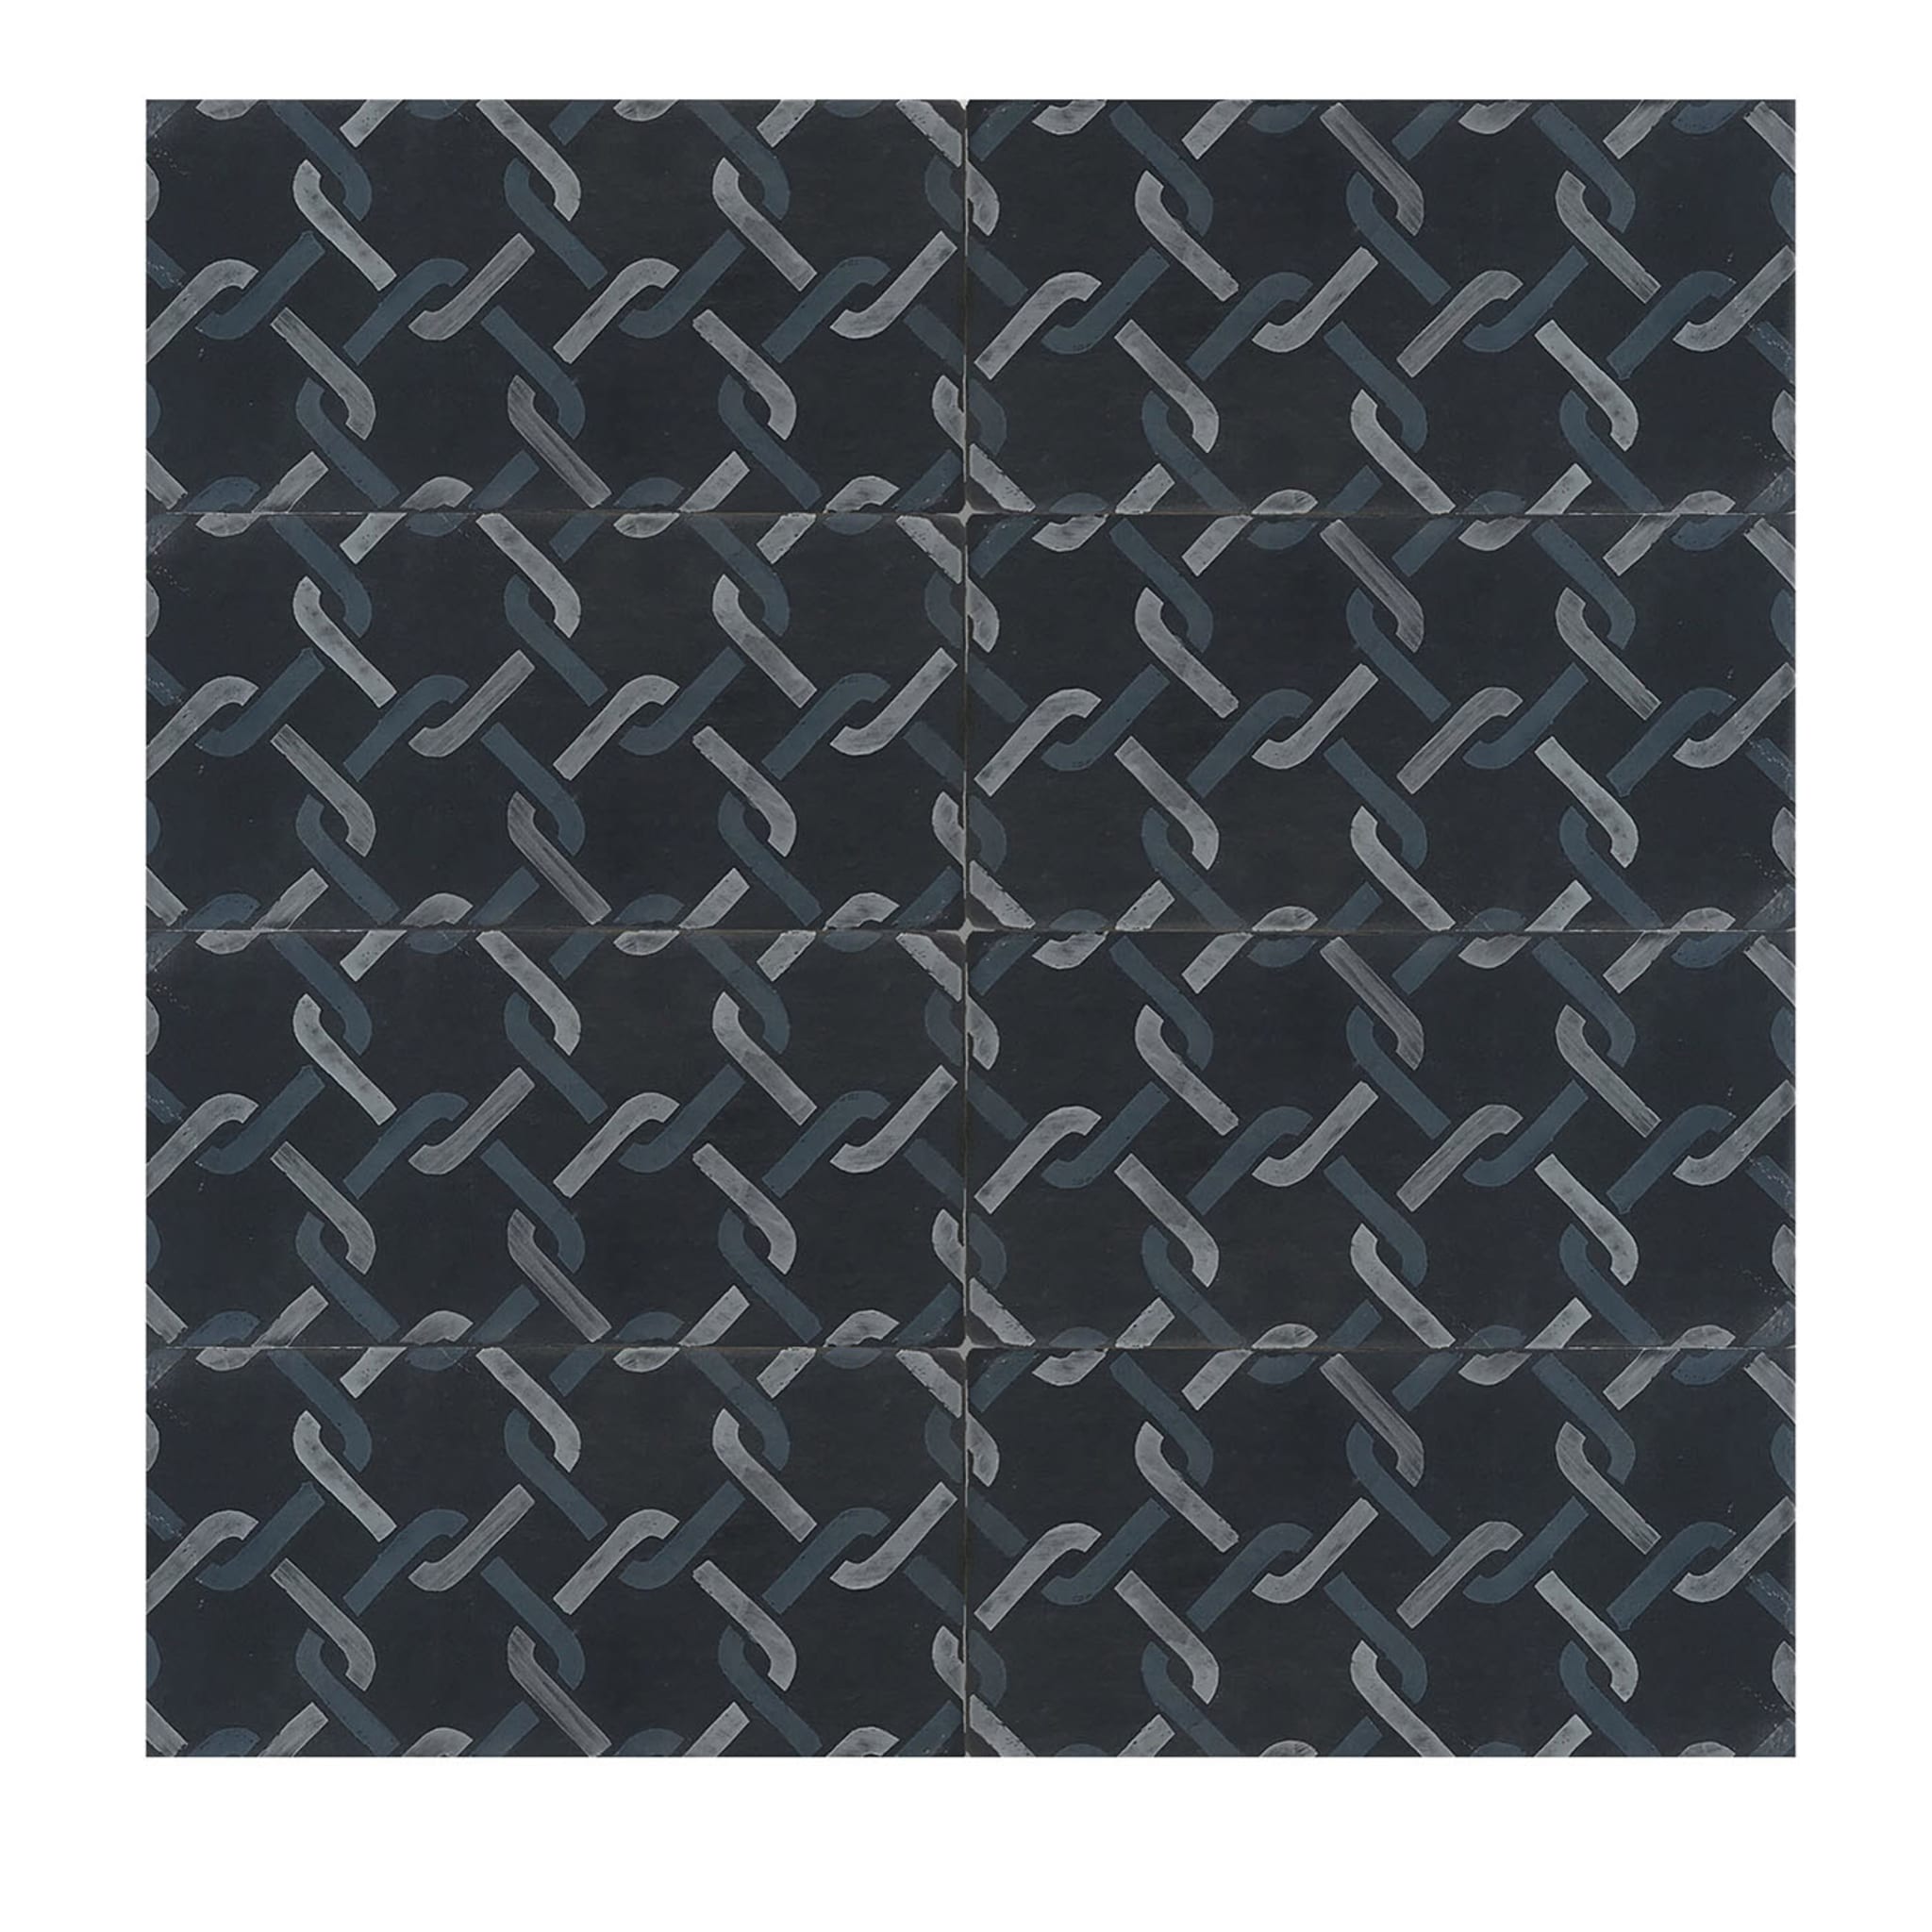 Daamè Set of 50 Rectangular Black Tiles - Main view